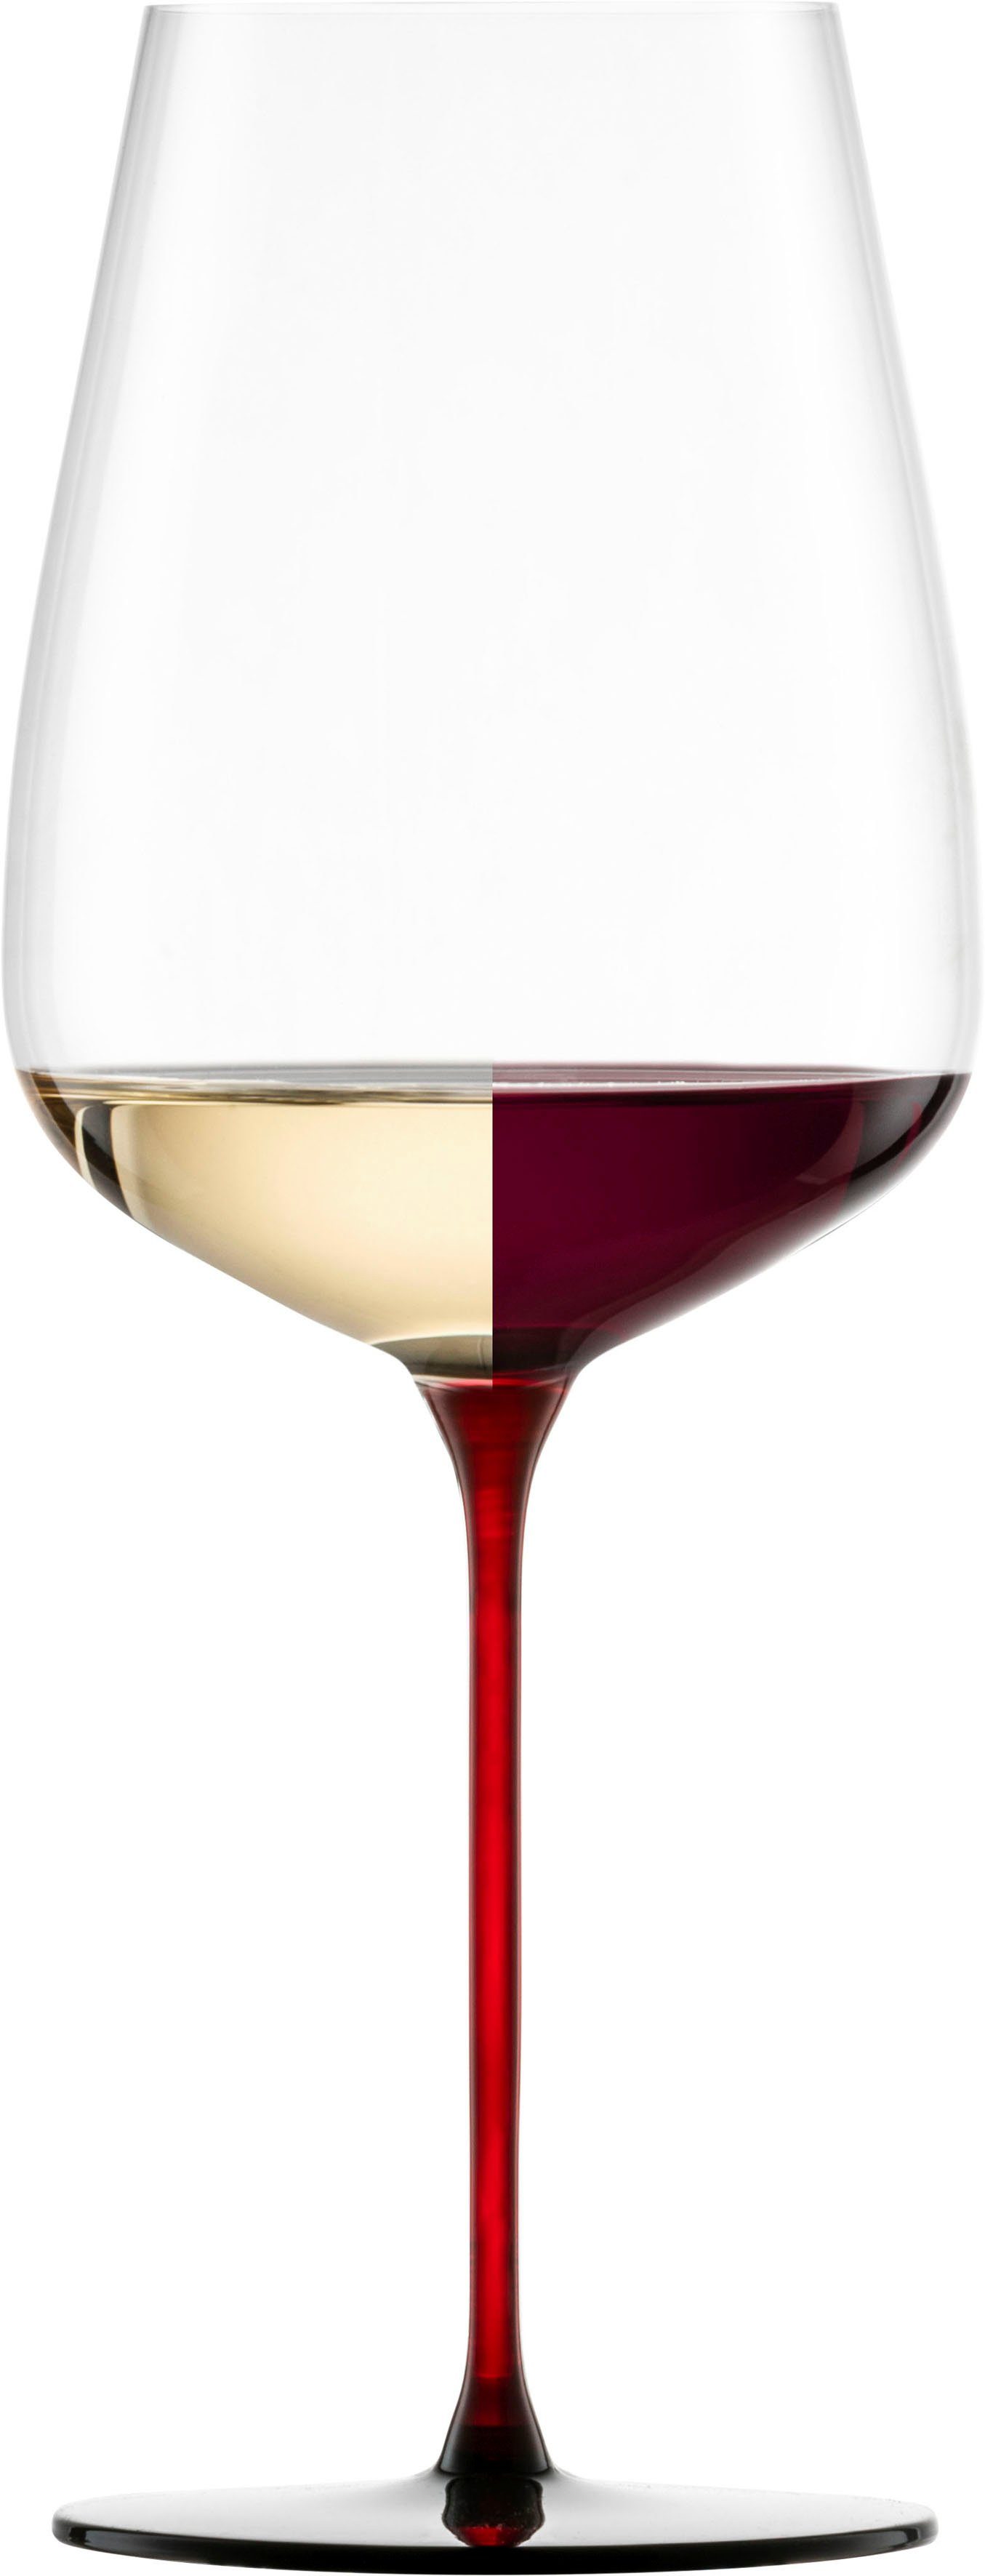 Eisch Weinglas RED SENSISPLUS, Kristallglas, 740 ml, Handarbeit, 2-teilig,  Made in Germany